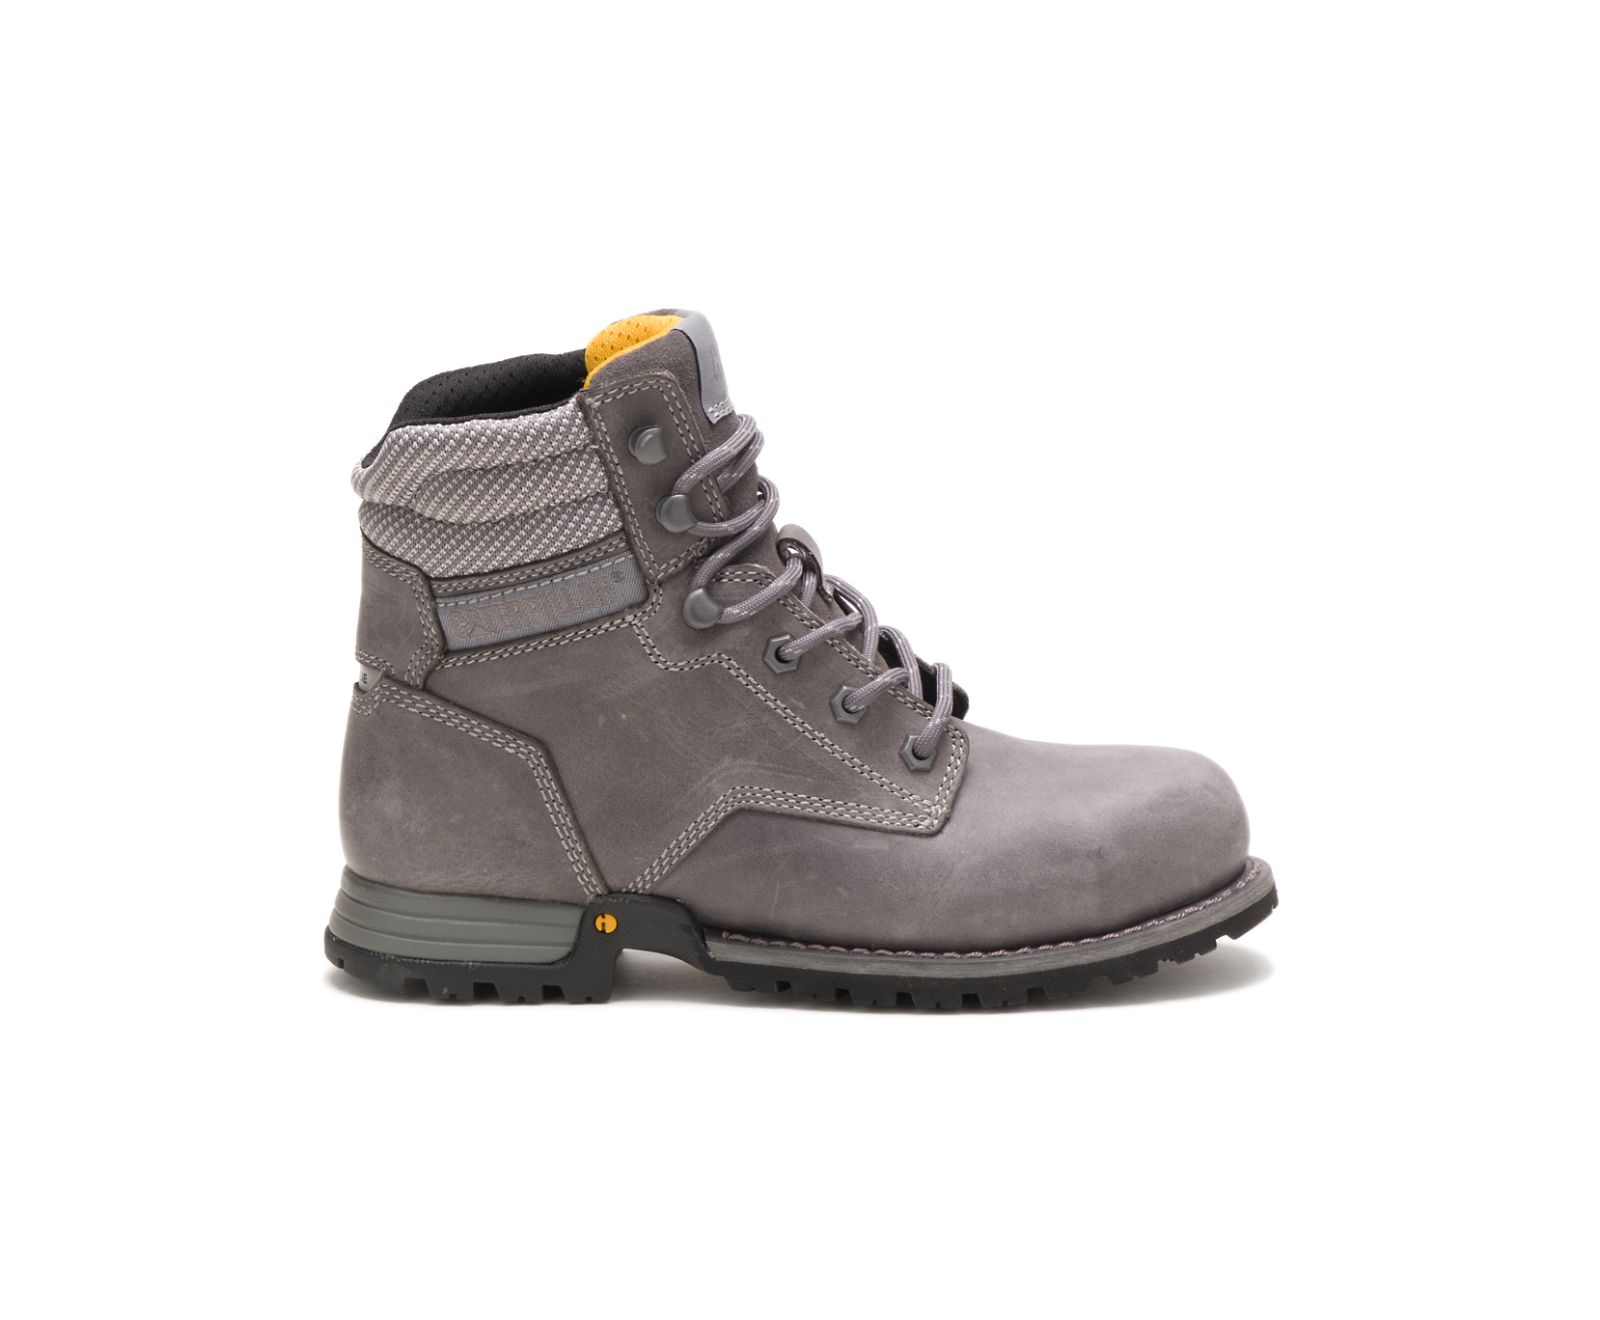 Paisley 6" Steel Toe Work Boots